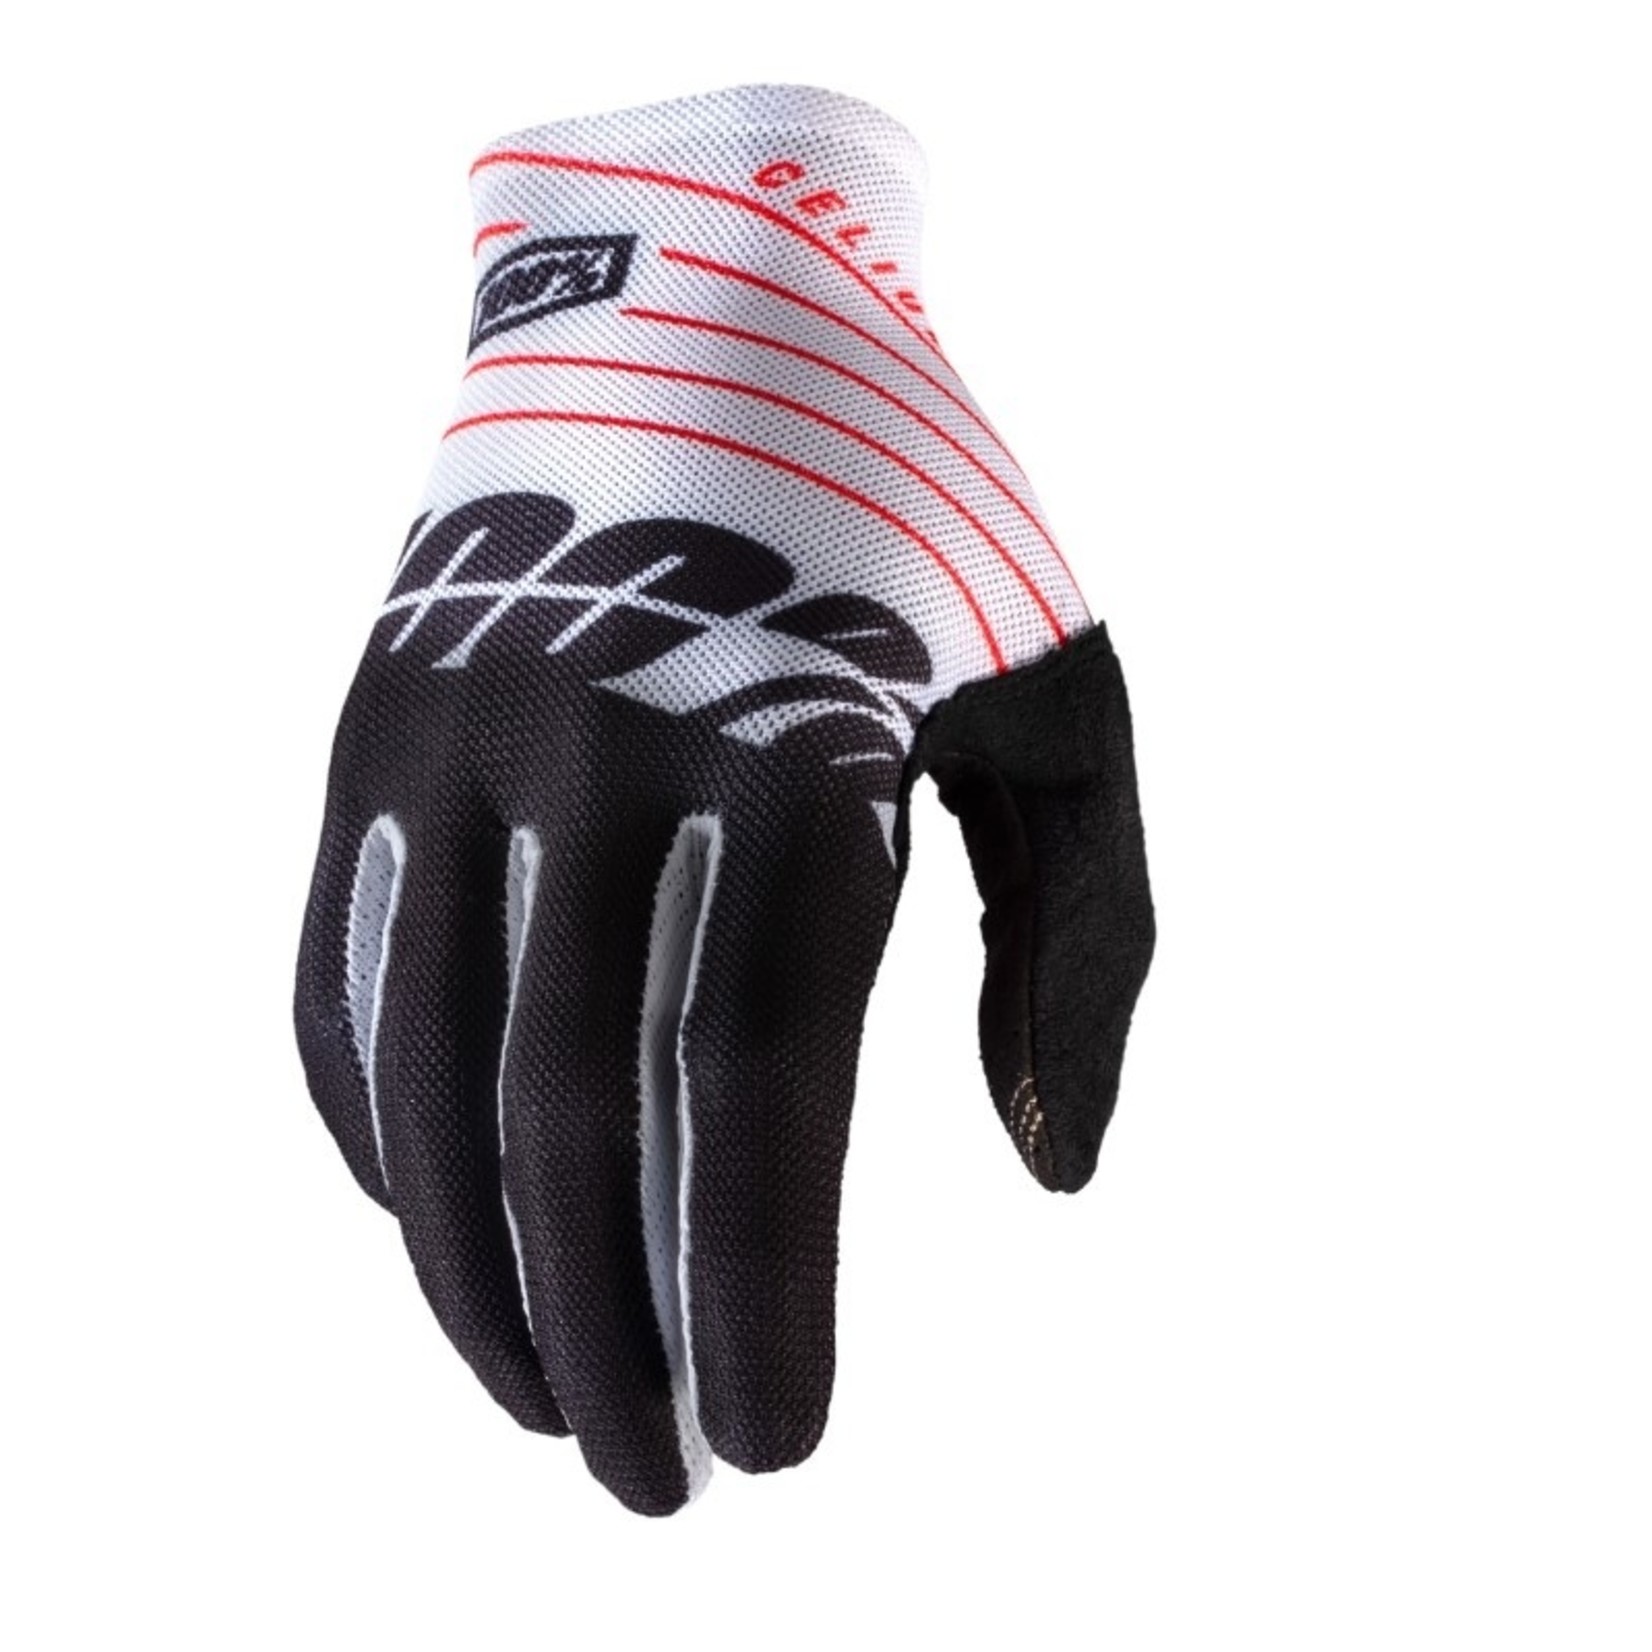 100% CELIUM Cycling Gloves - Black/White